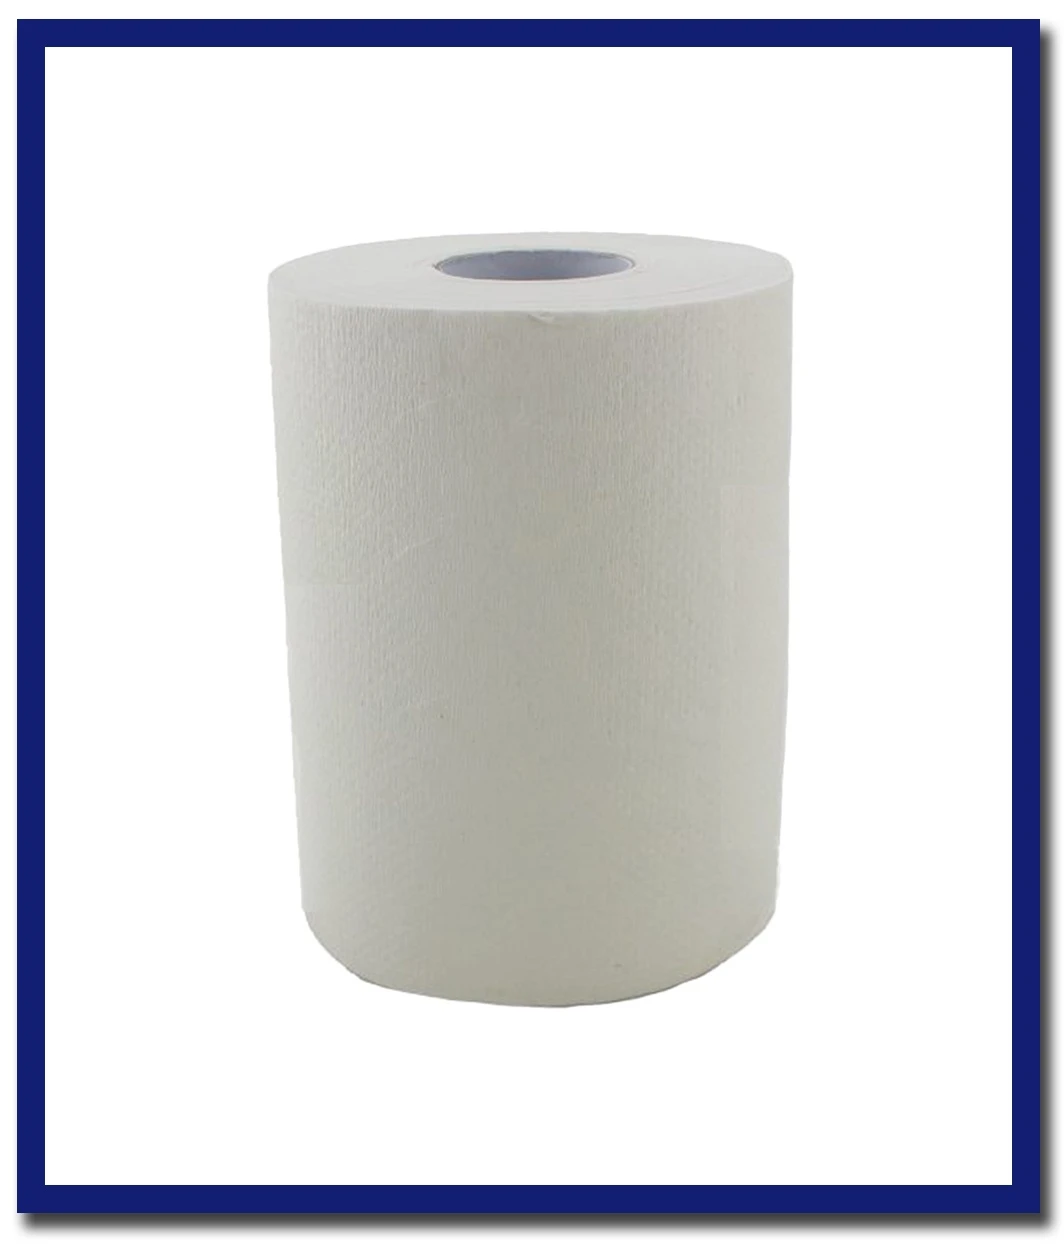 MaxValu Paper Hand Towel Roll - (16 Rolls Per Box) - Stone Doctor Australia - Washroom Products > Hygiene > Paper Towel Roll